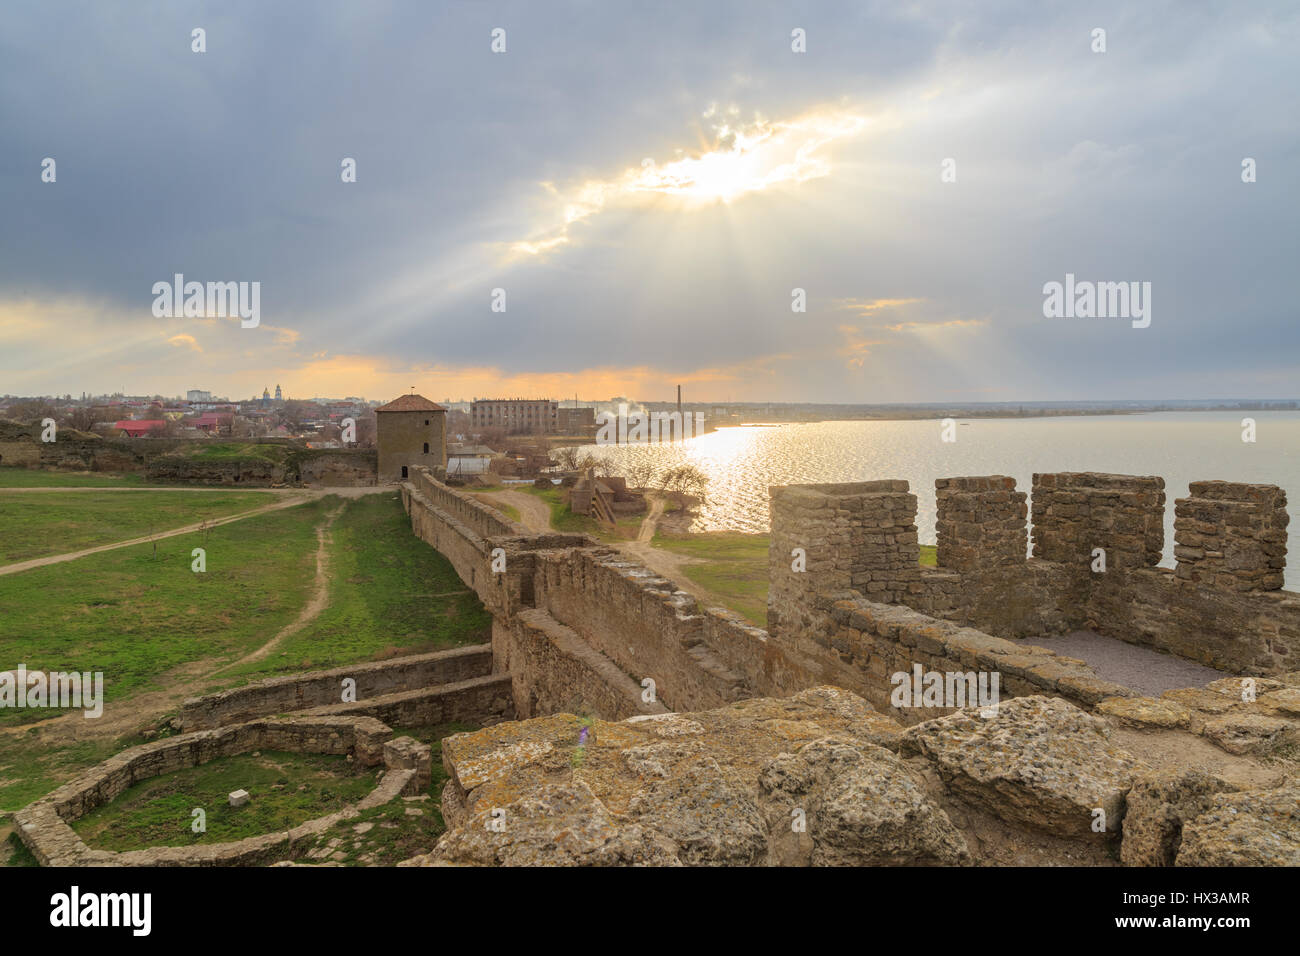 Akkerman fortress and belgorod city during sunset in Odessa, Ukraine Stock Photo